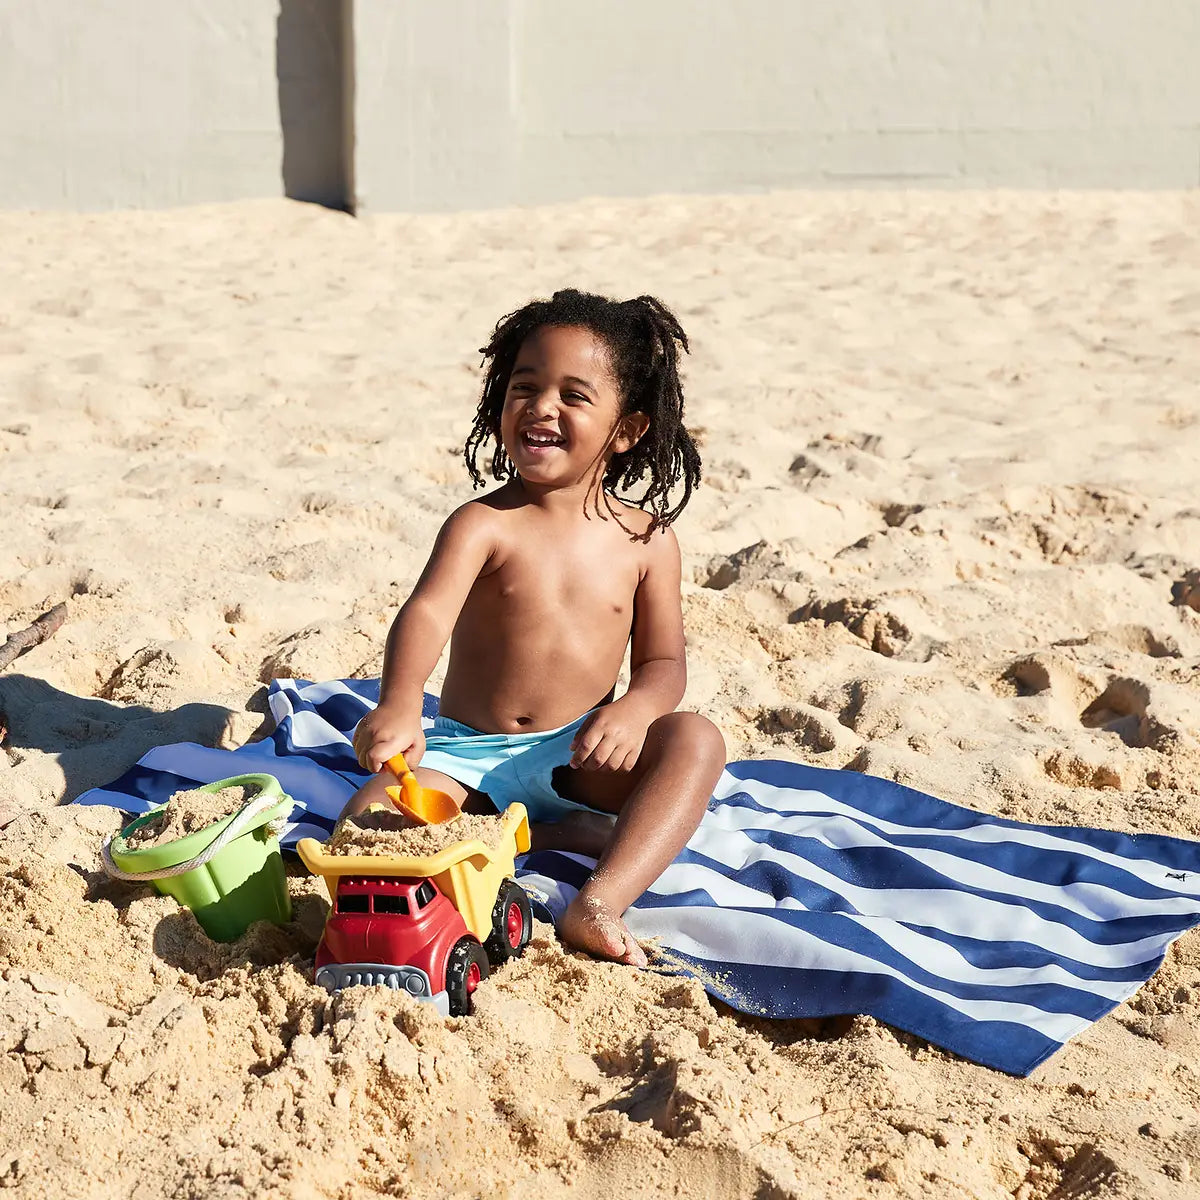 Kid Size Beach Towel - Navy Stripe - UPF 50+